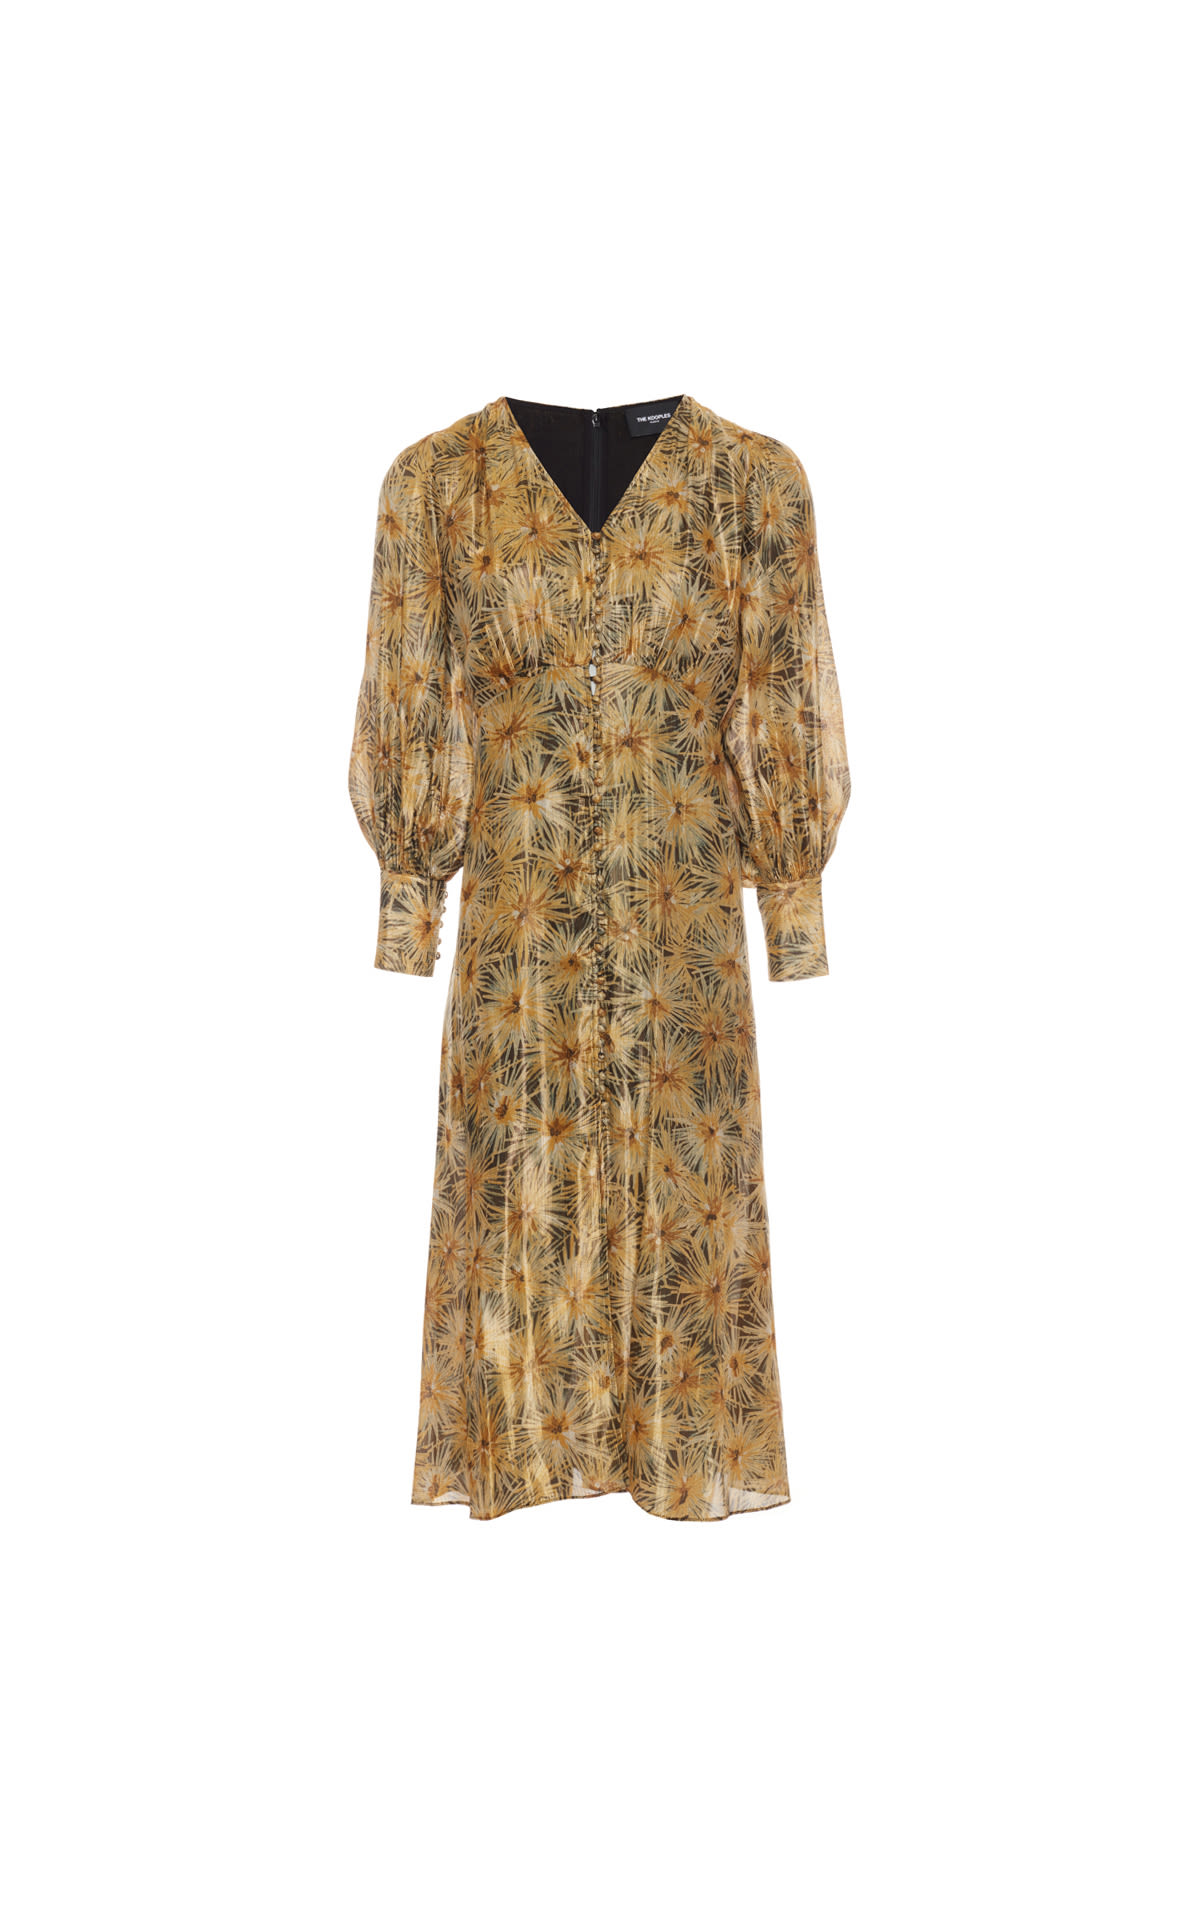 The Kooples Golden print dress from Bicester Village